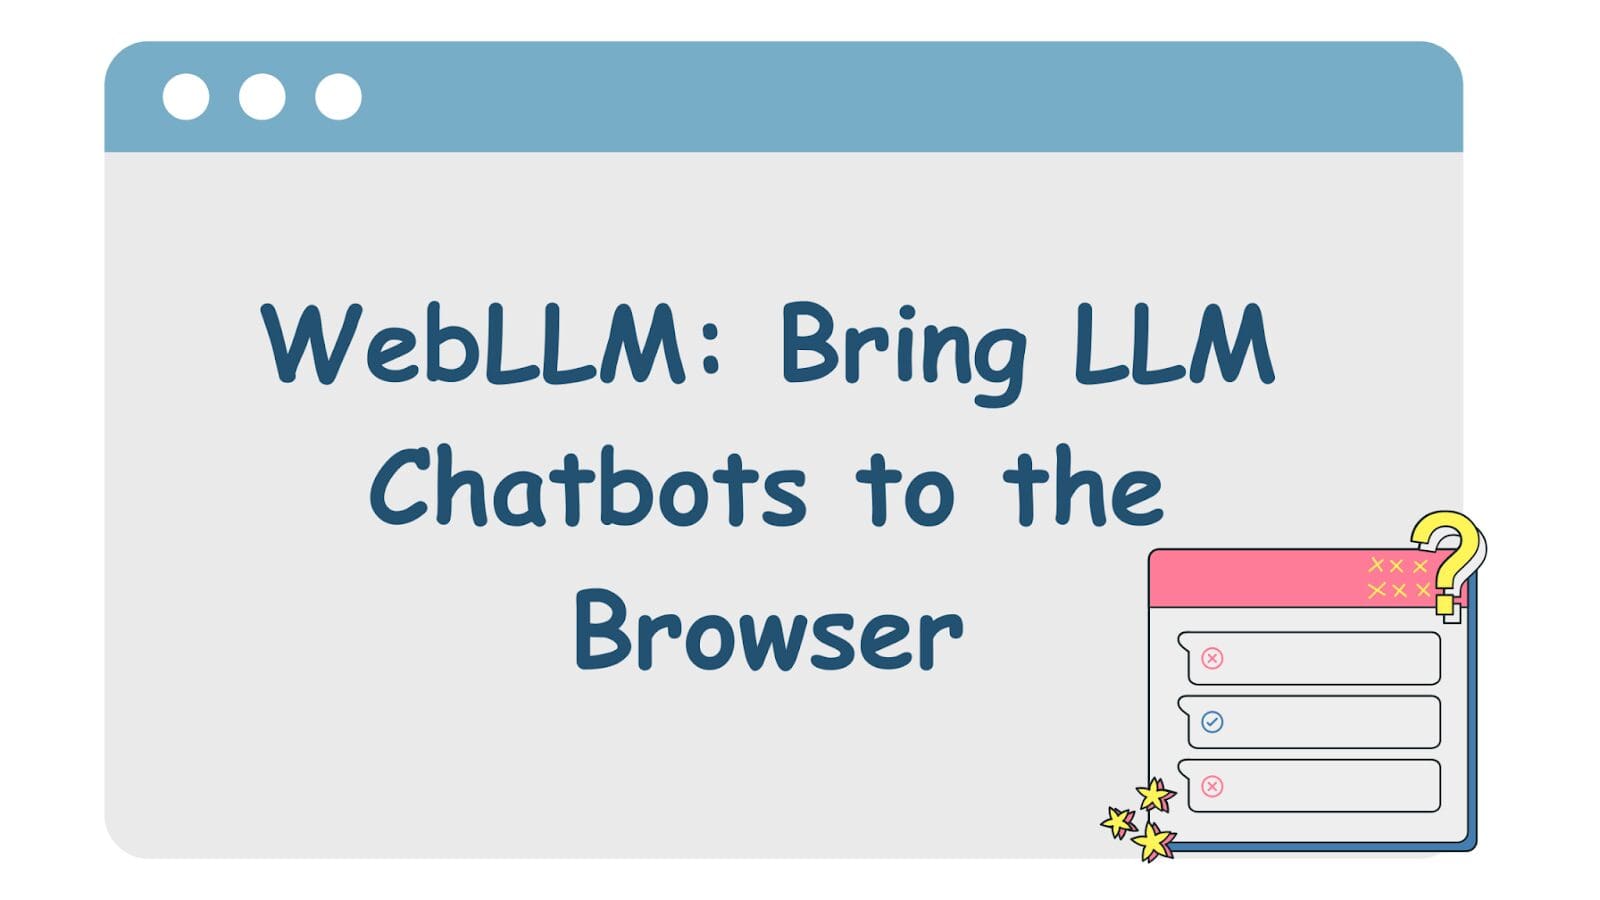 Web LLM: Bring LLM Chatbots to the Browser